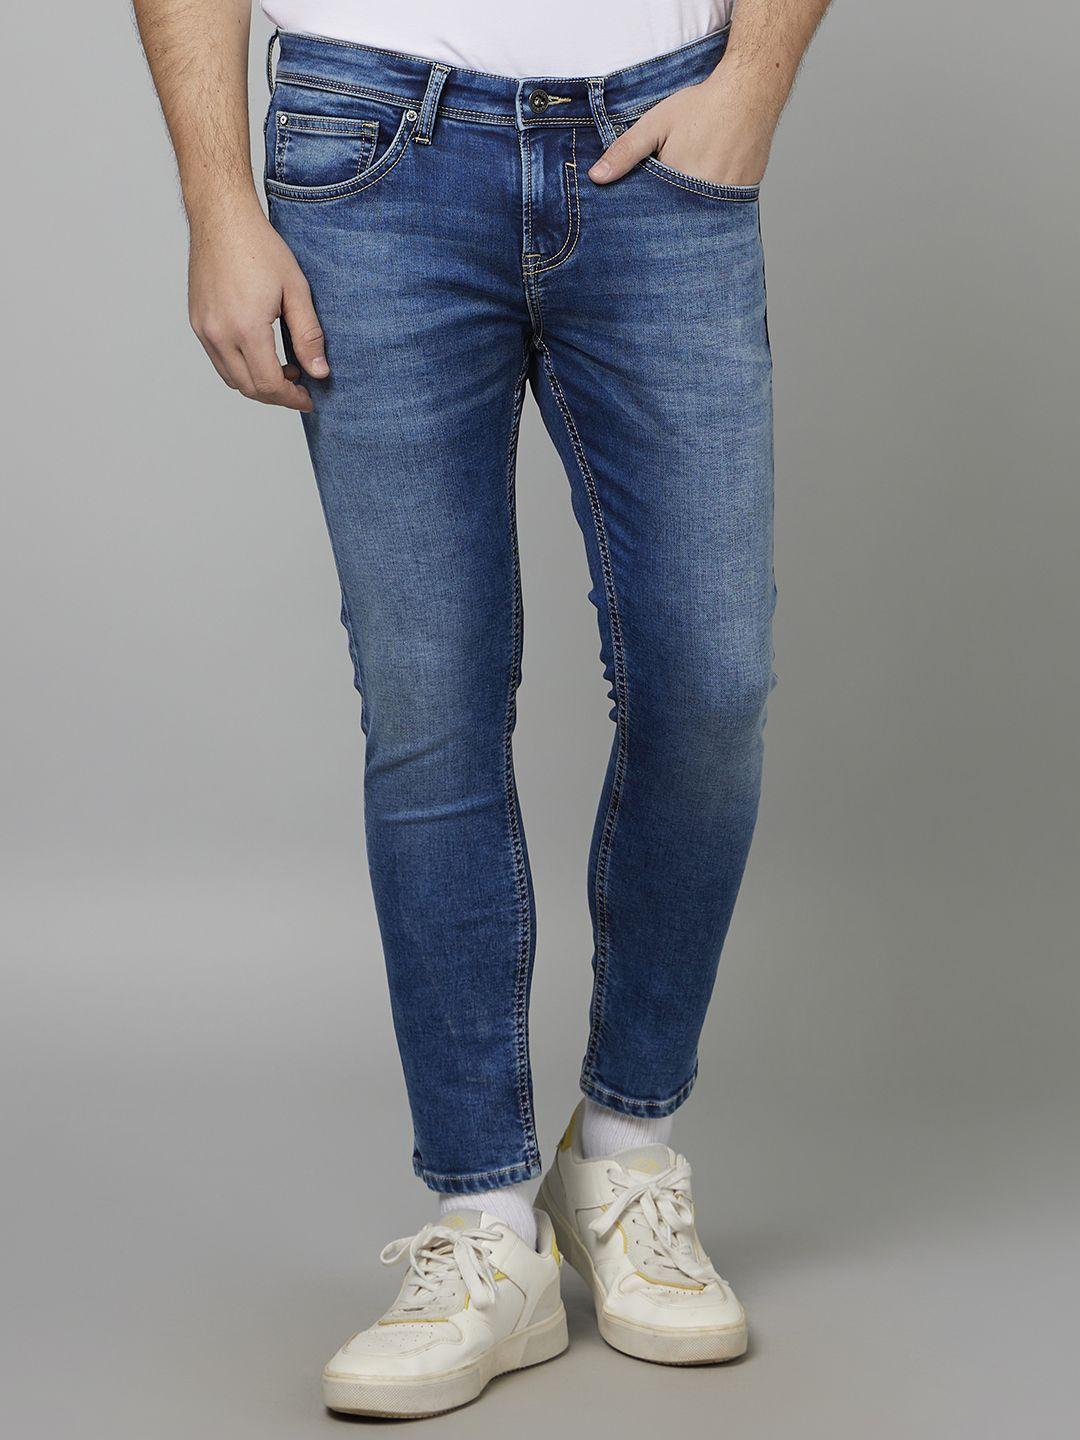 celio-men-light-fade-lean-look-jean-skinny-fit-stretchable-jeans